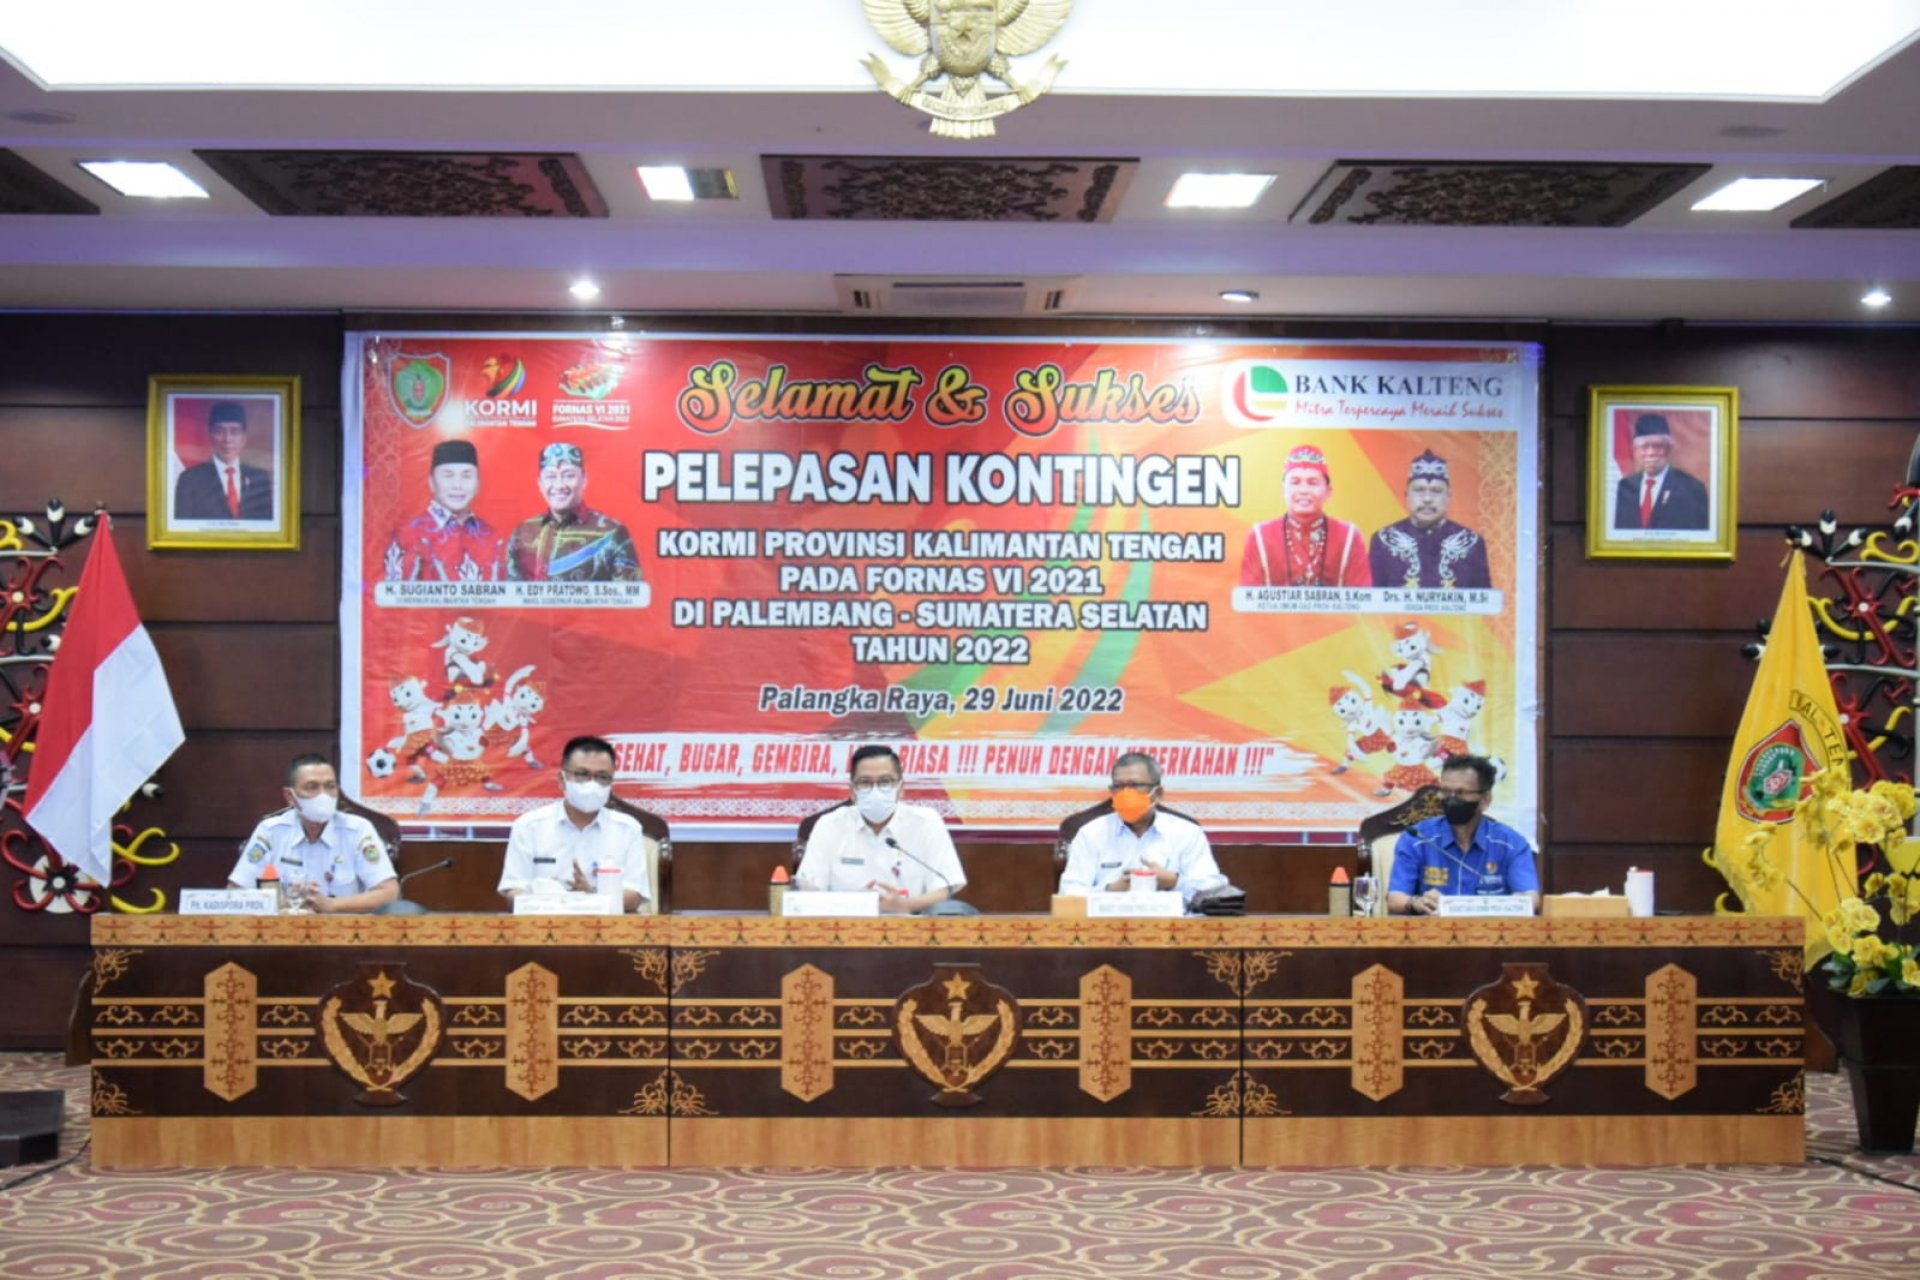 Pelepasan Kontingen KORMI Kalteng ke FORNAS VI Palembang